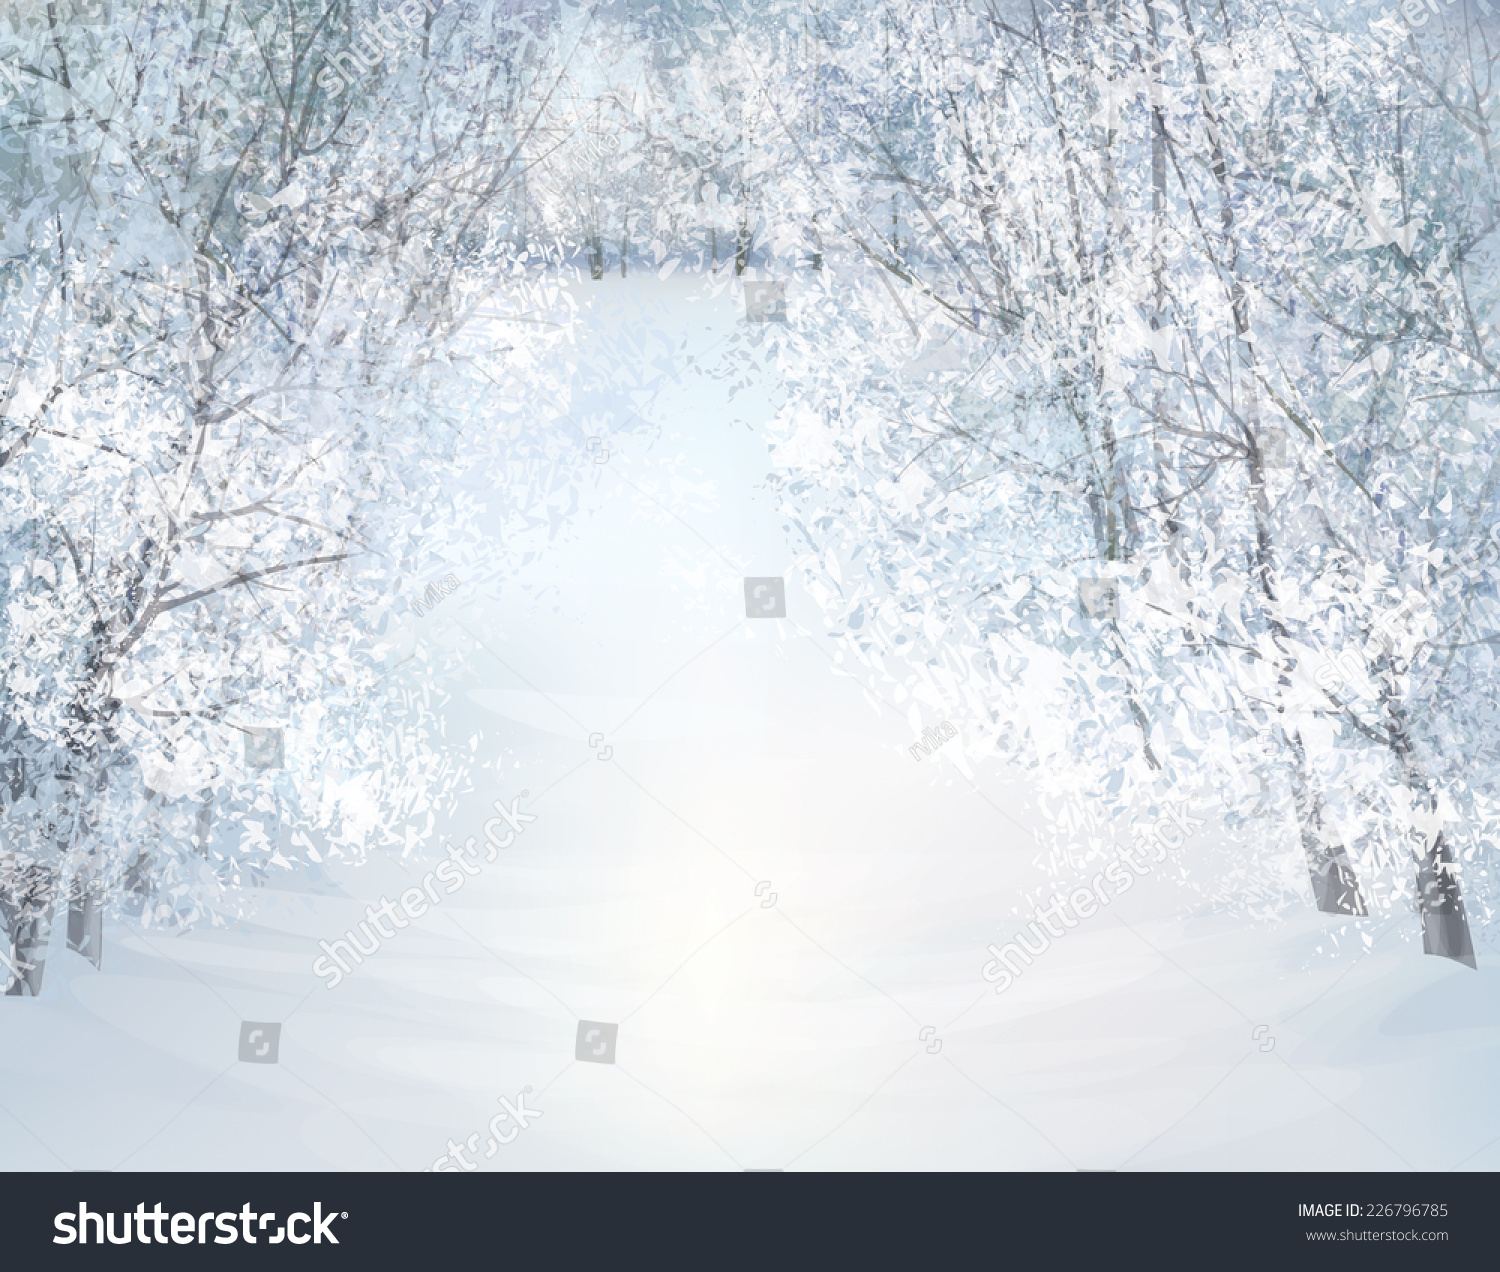 Vector Winter Snow Landscape. - 226796785 : Shutterstock